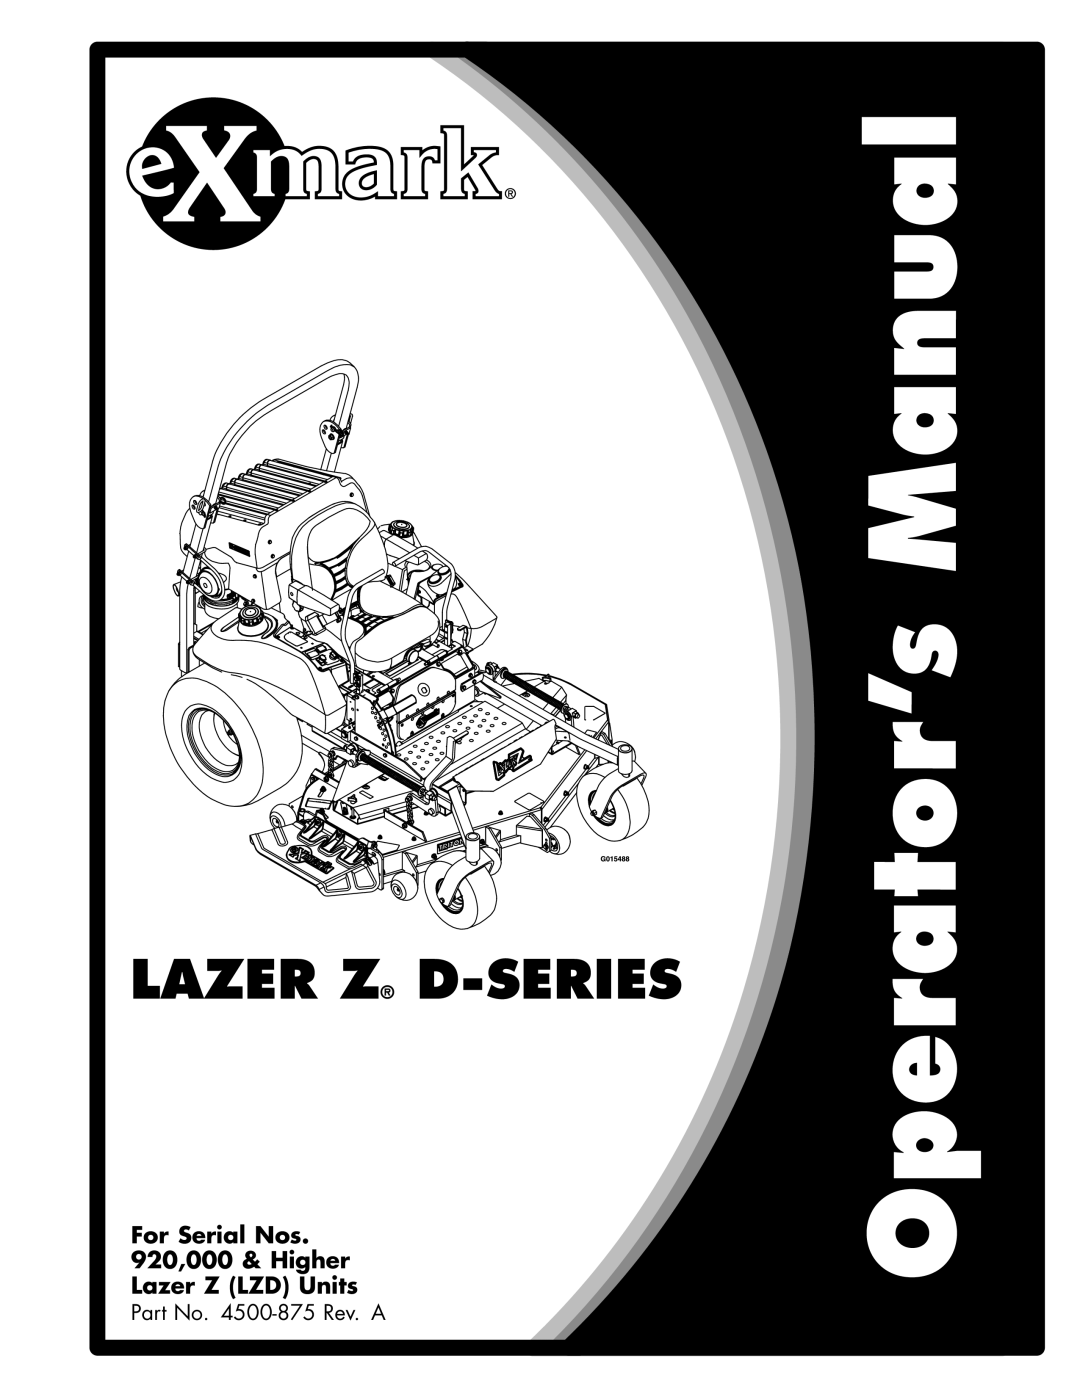 Exmark 920 manual Lazer Z S-SERIES 